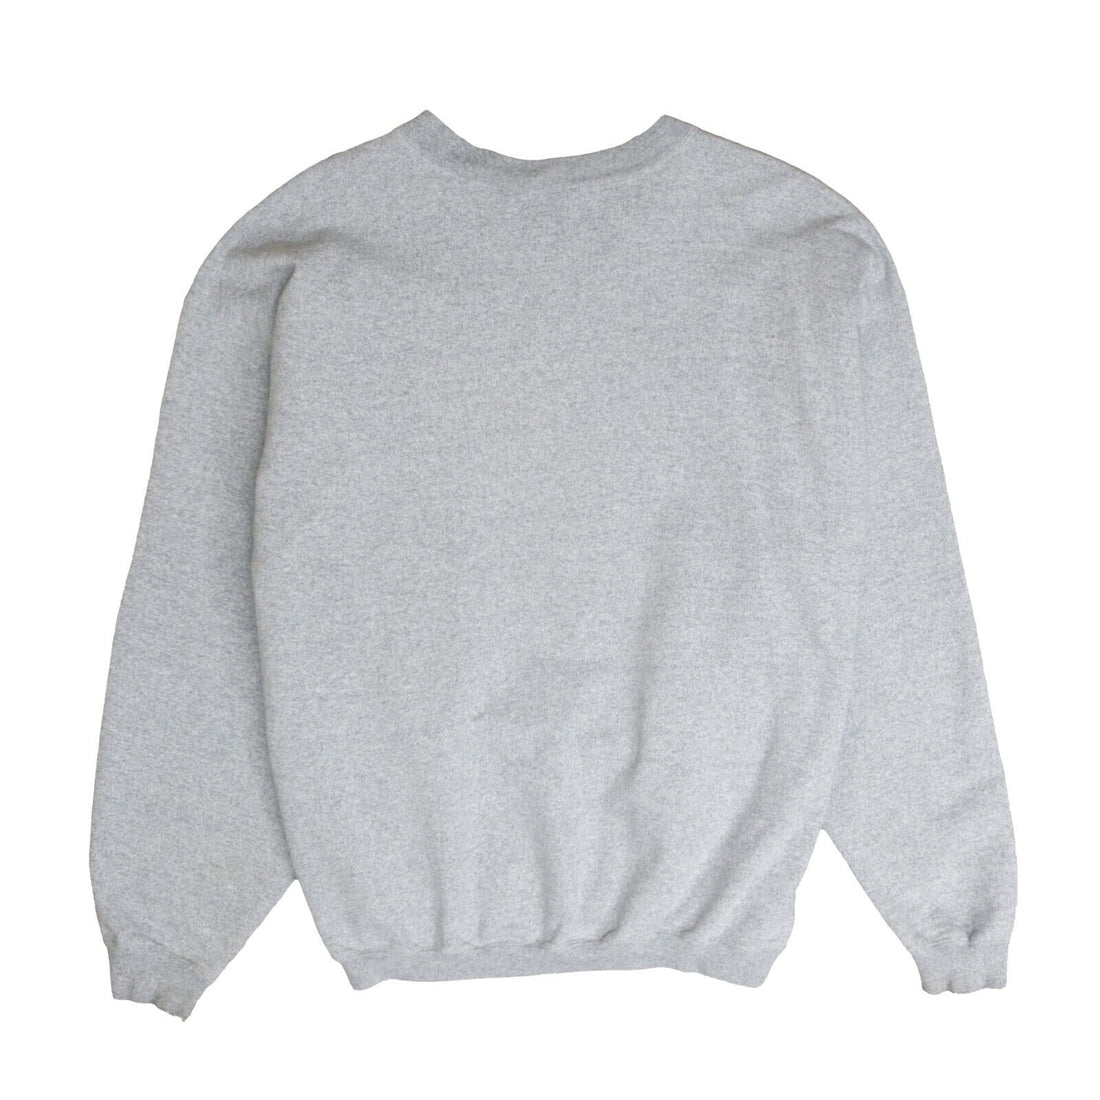 Vintage Michigan Tech Sweatshirt Crewneck Size XL Gray